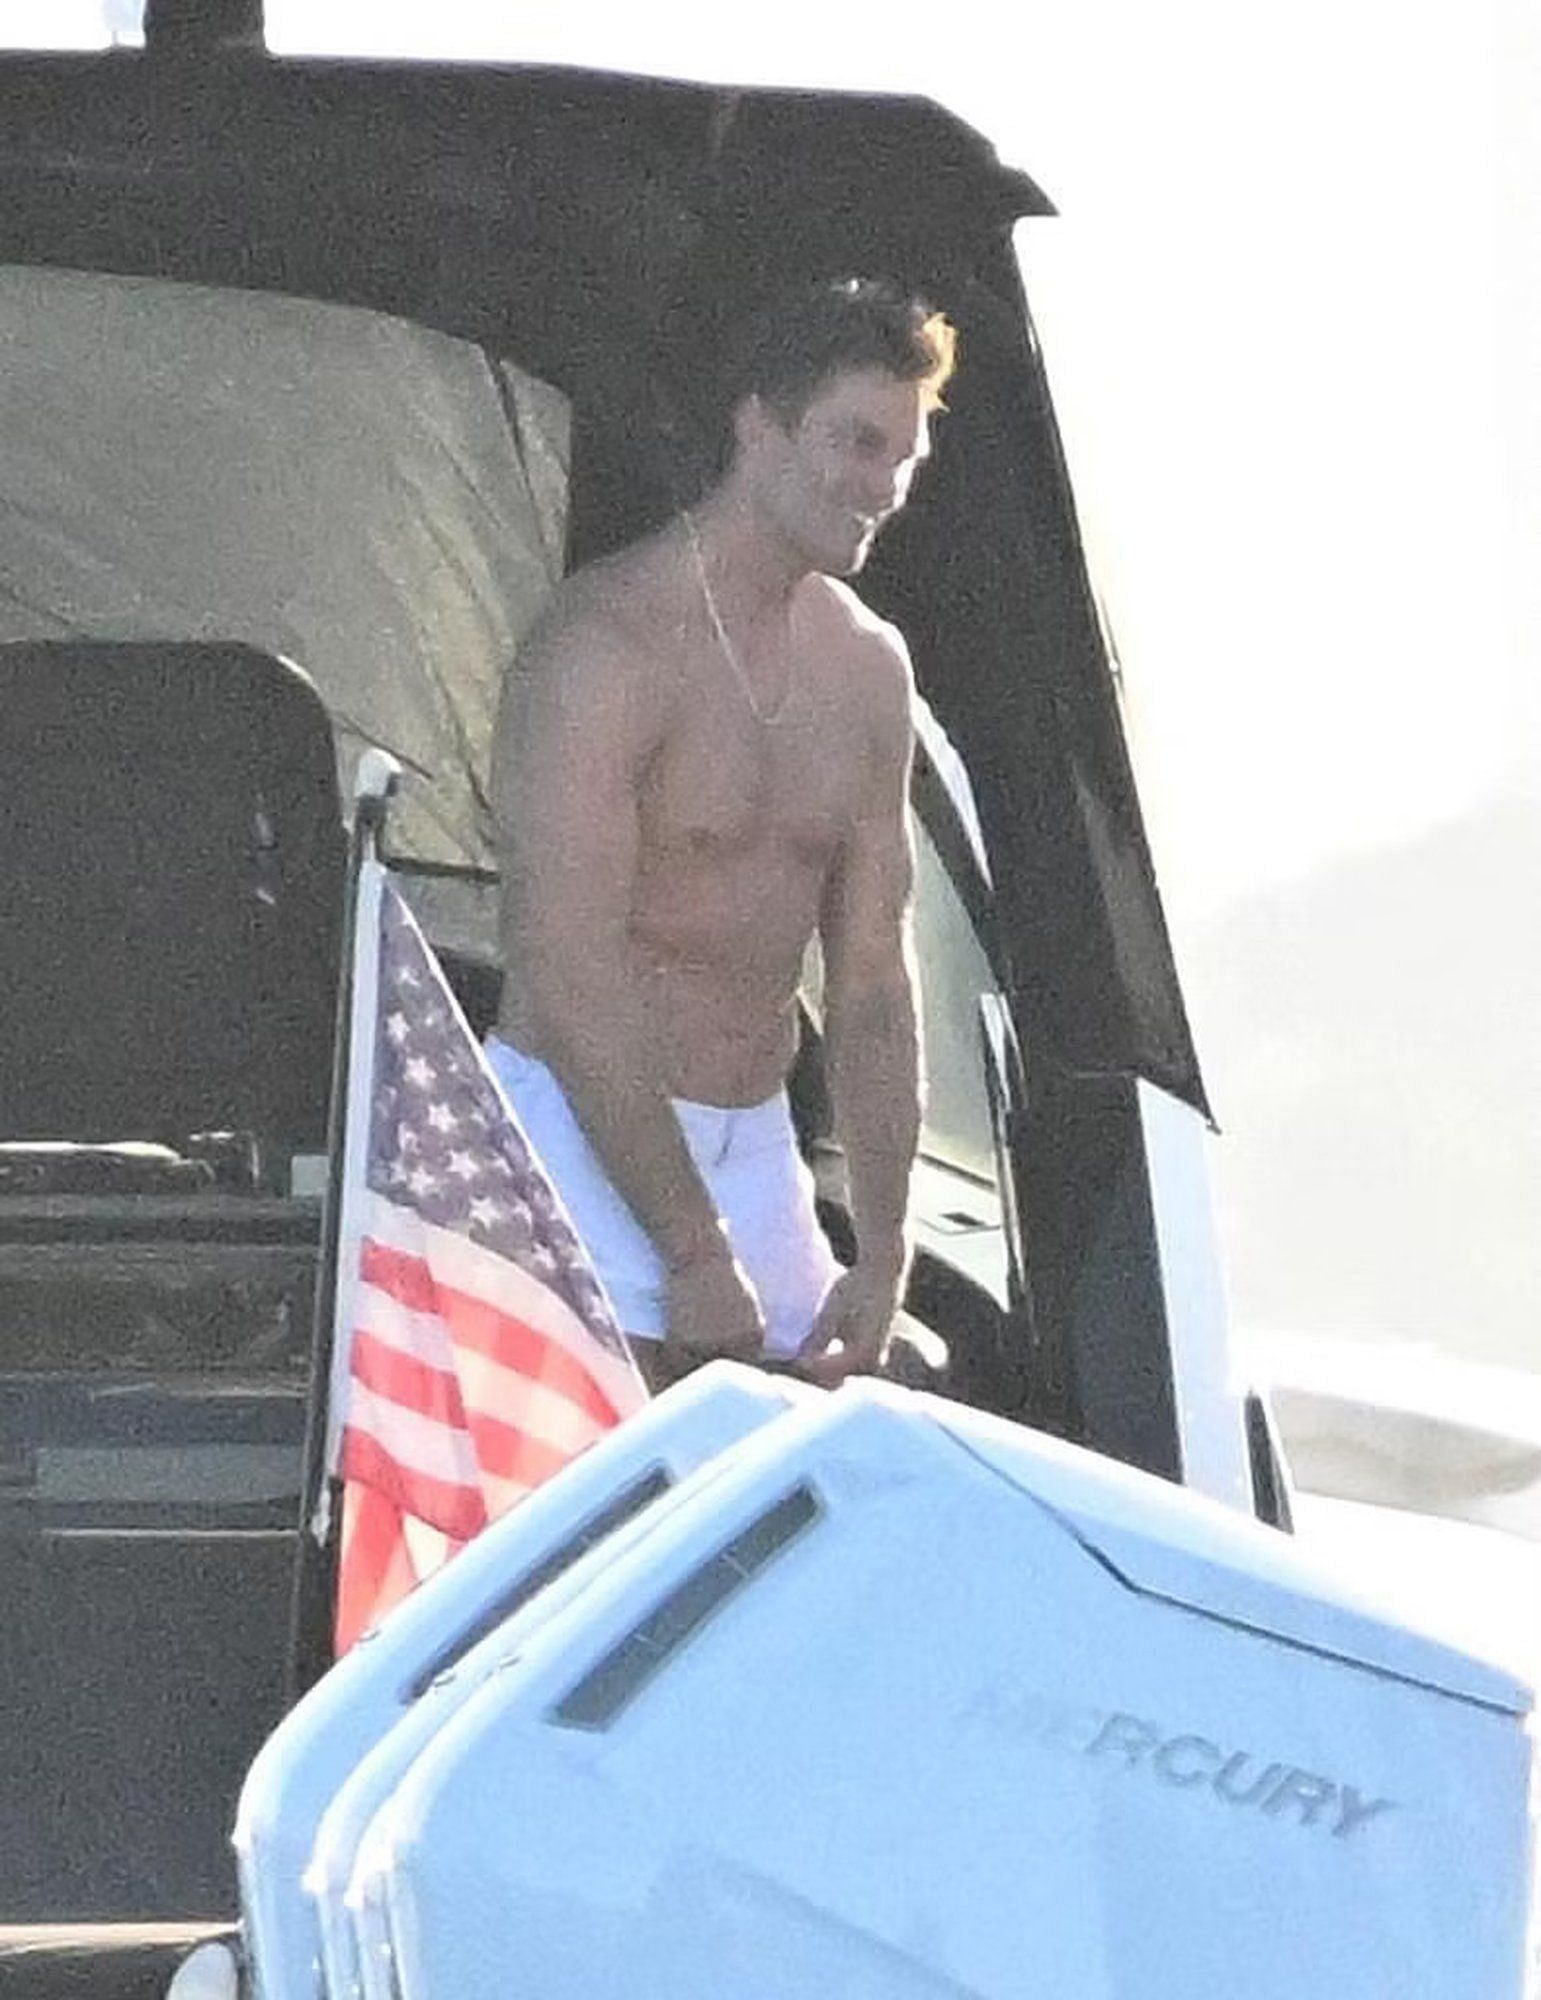 In Photos Tom Bradys Shirtless Ride On 6000000 Worth Yacht Creates Waves In Miami Beach 7639